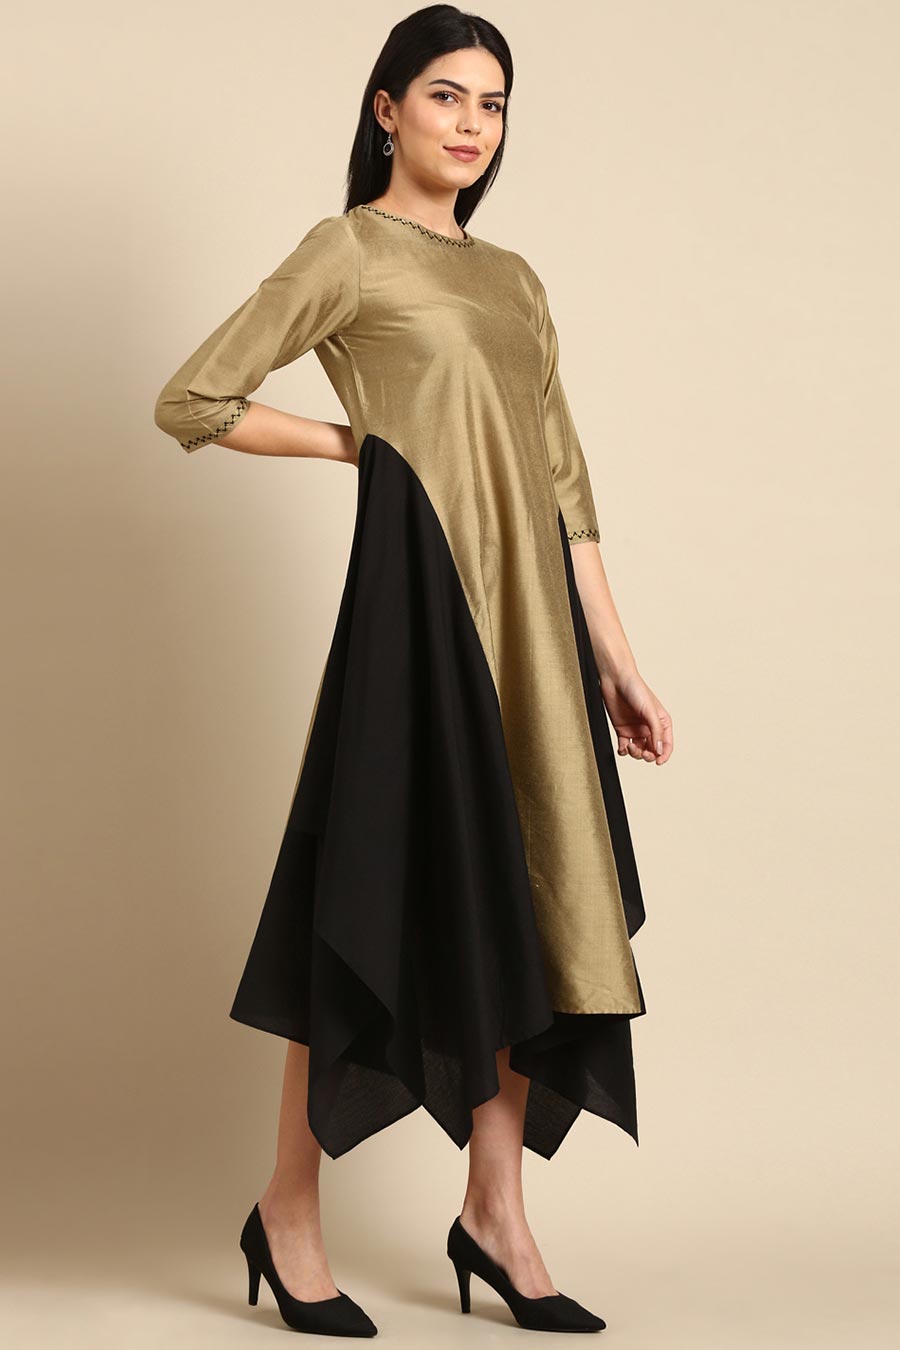 Gold & Black Panel Dress